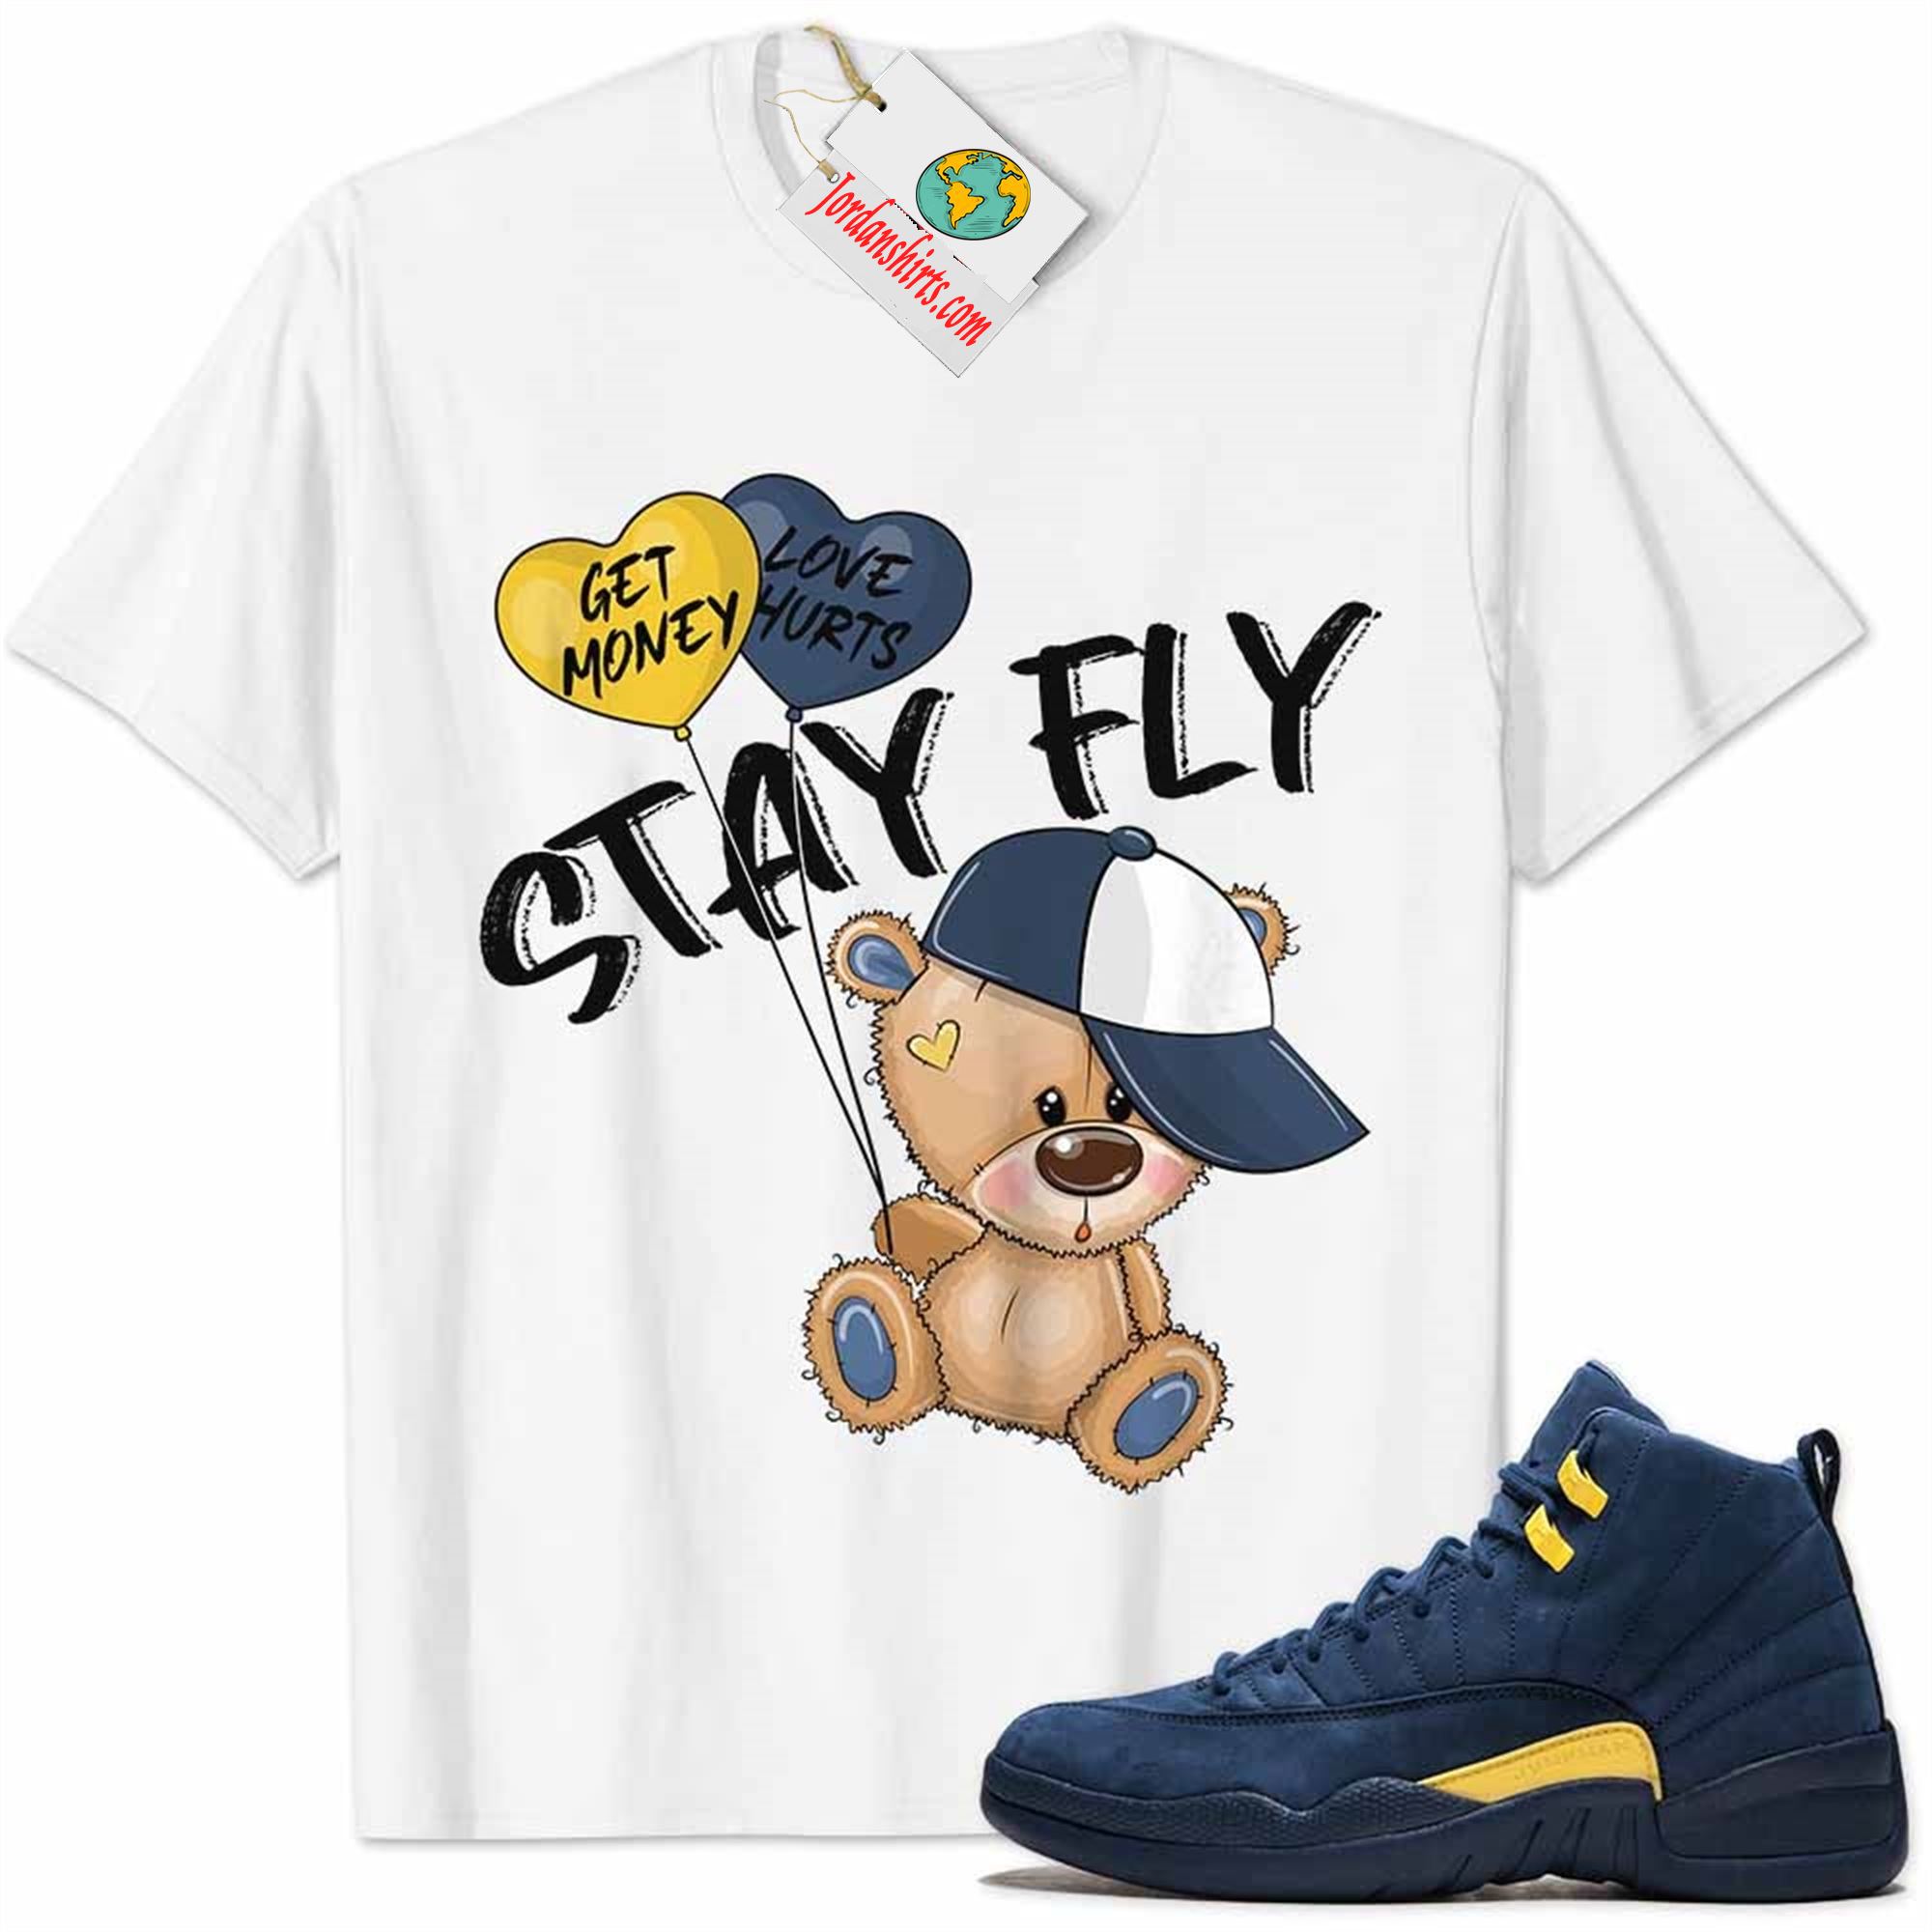 Jordan 12 Shirt, Michigan 12s Shirt Cute Teddy Bear Stay Fly Get Money White Size Up To 5xl